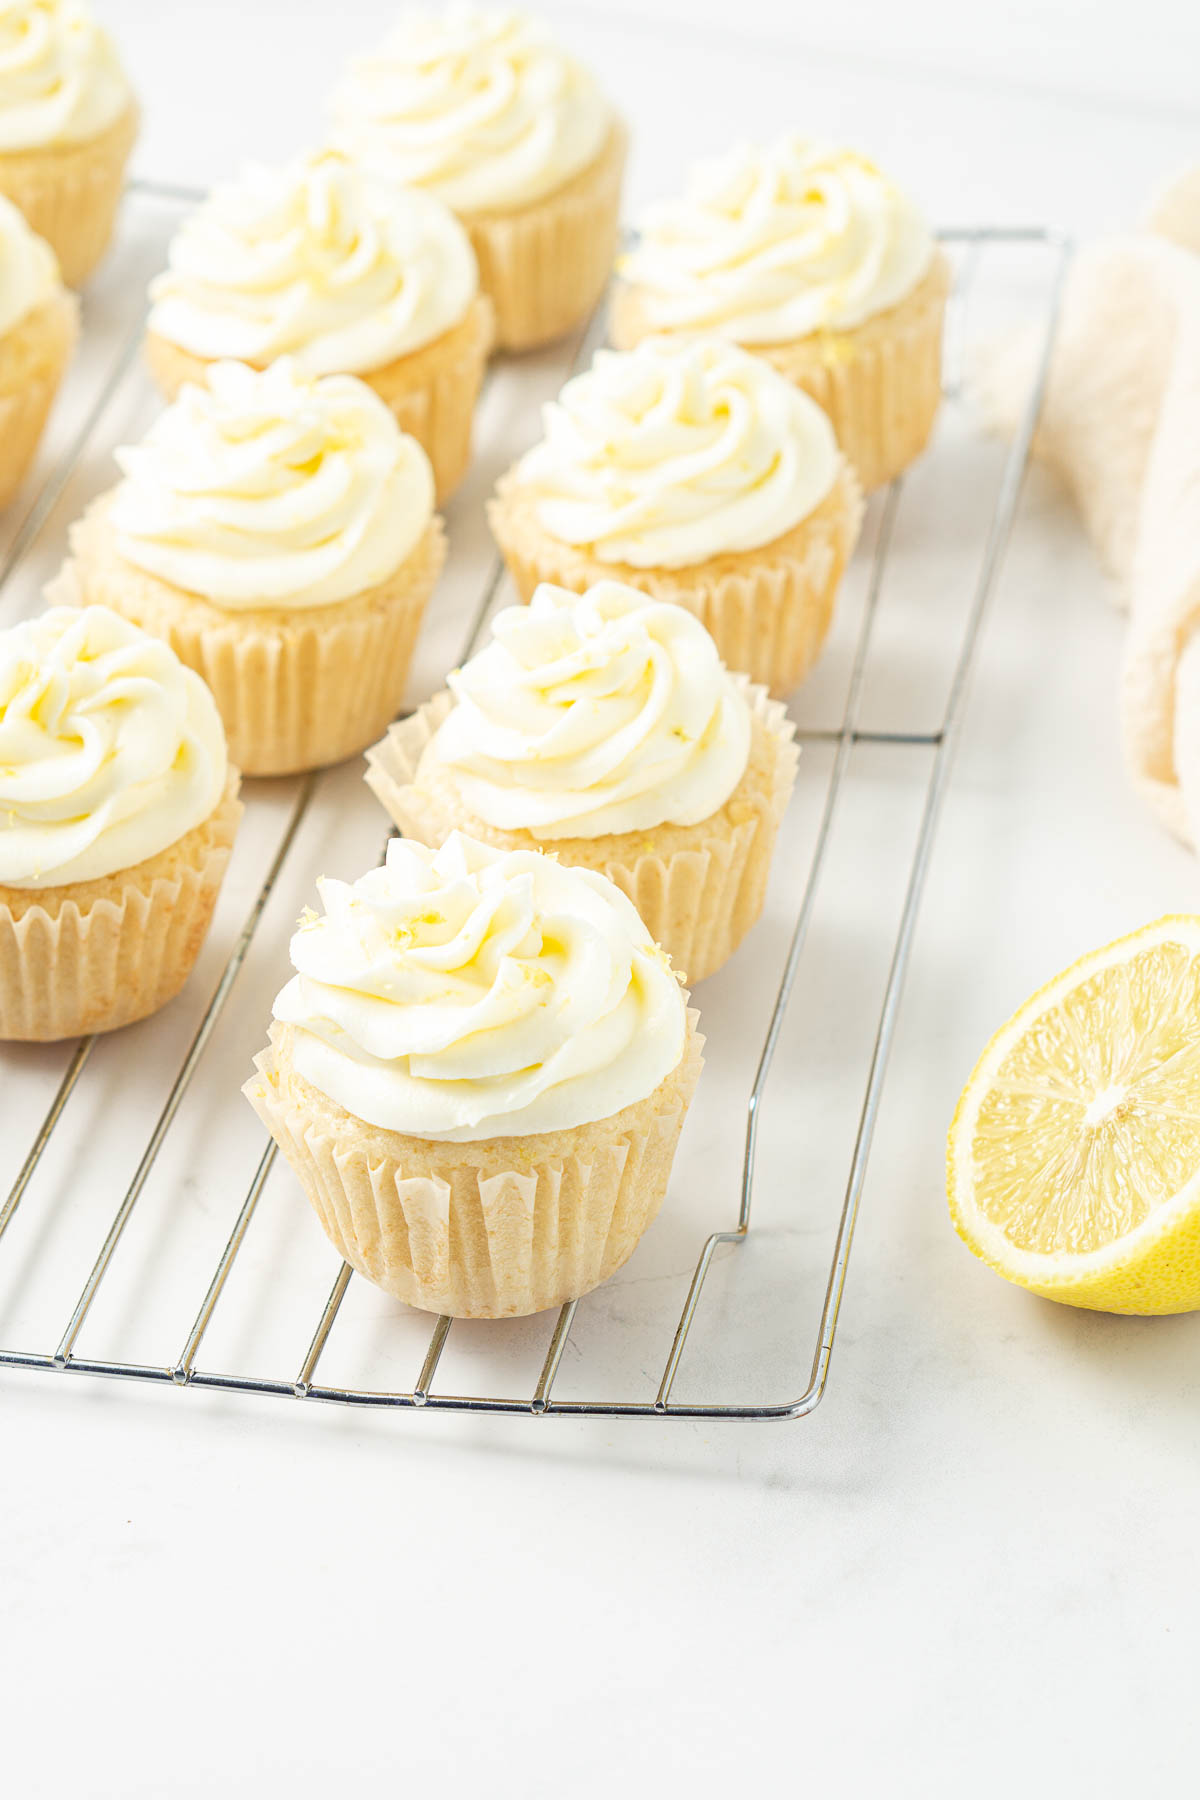 Lemon cupcakes with lemon buttercream.